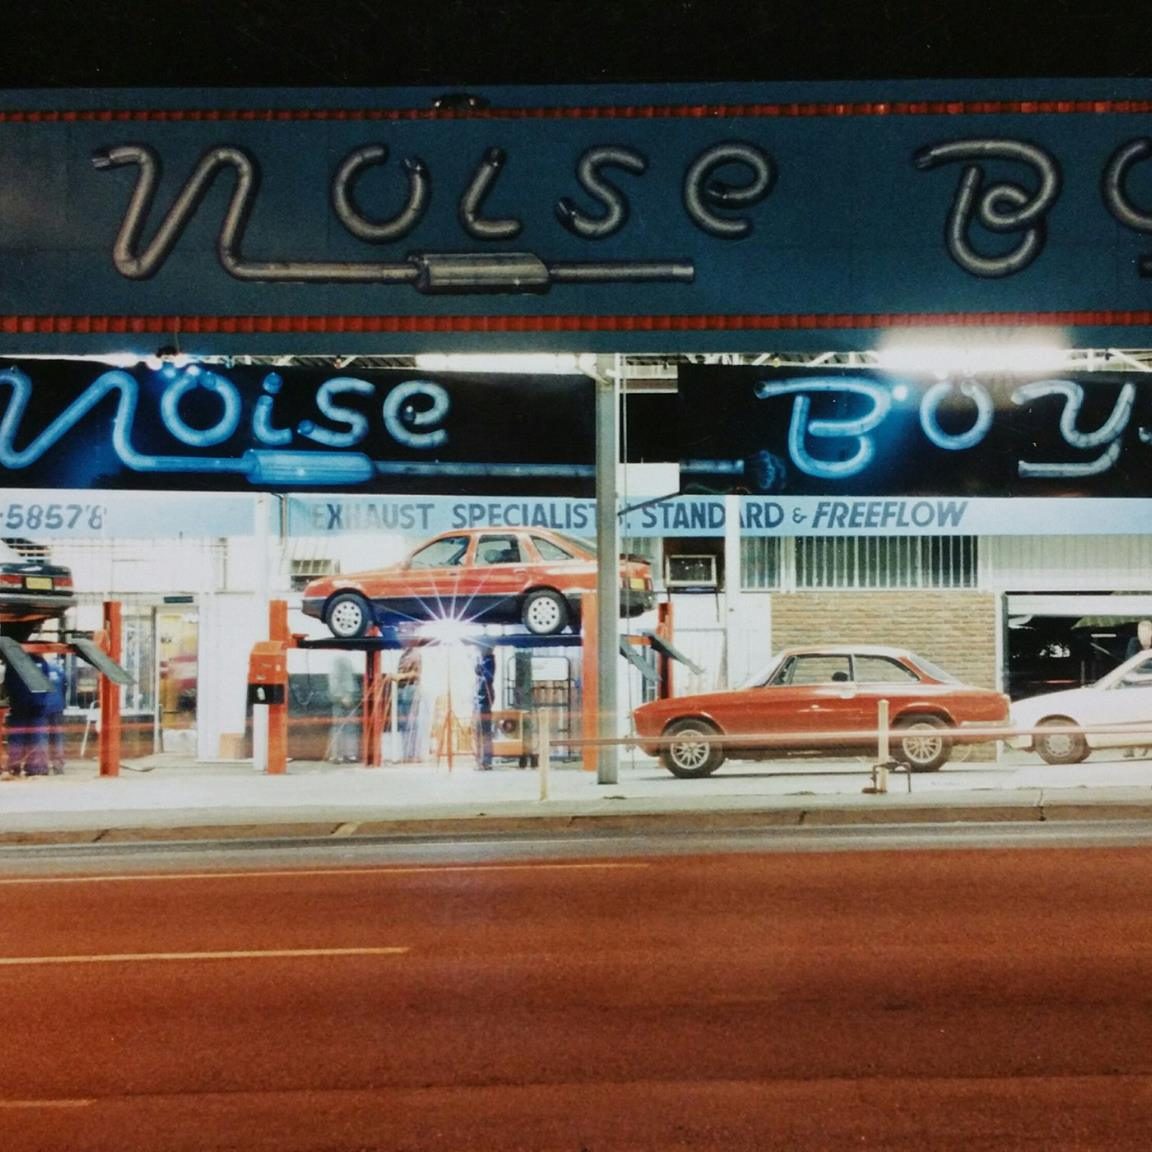 About Noise Boys, Noise Boys